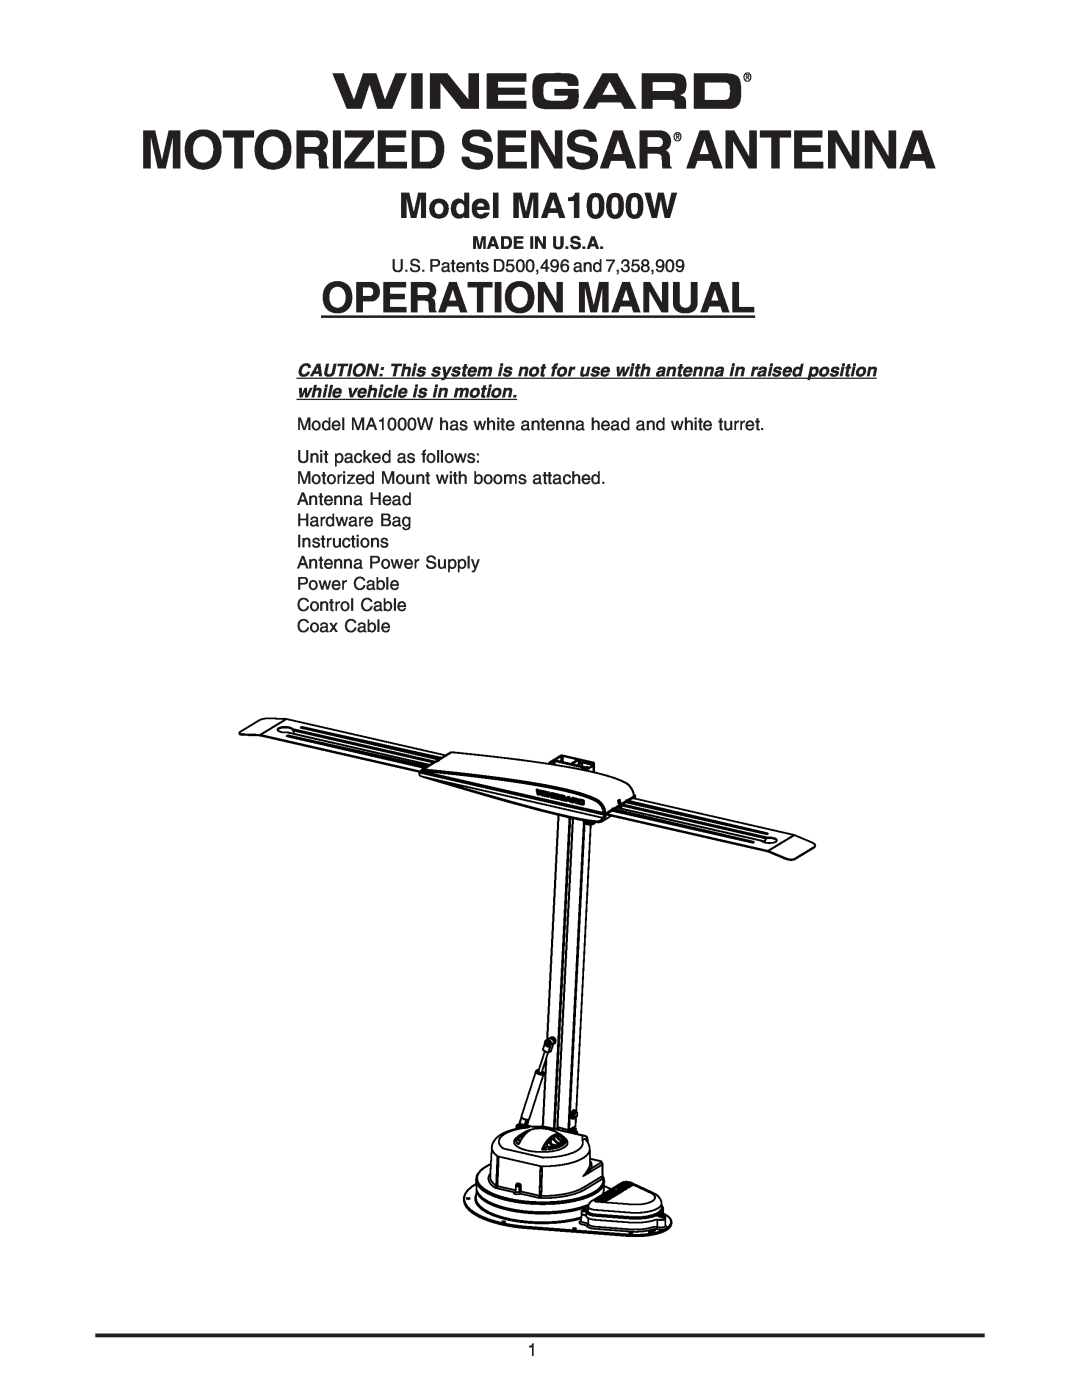 Winegard operation manual Winegard Motorized Sensar Antenna, Model MA1000W, Made In U.S.A 